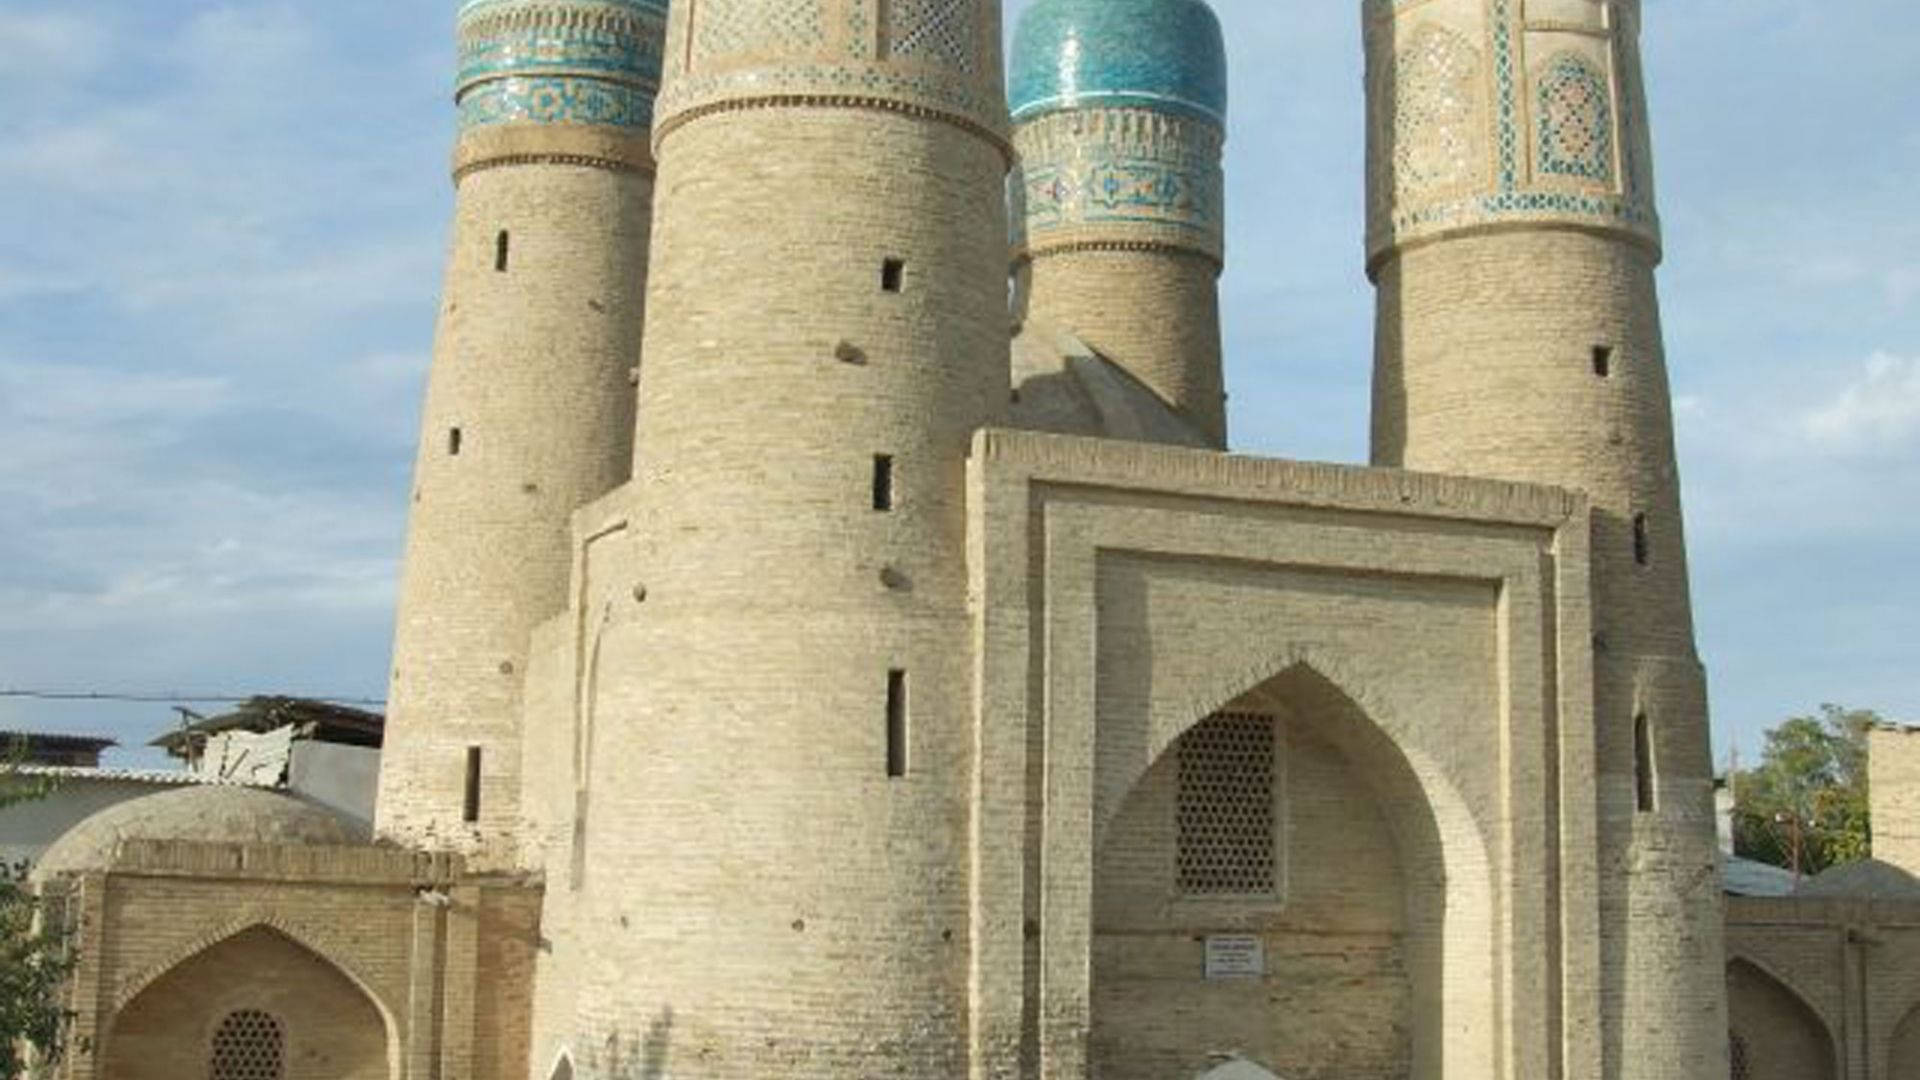 Uzbekistan Chor Minor Madrassah Gatehouse